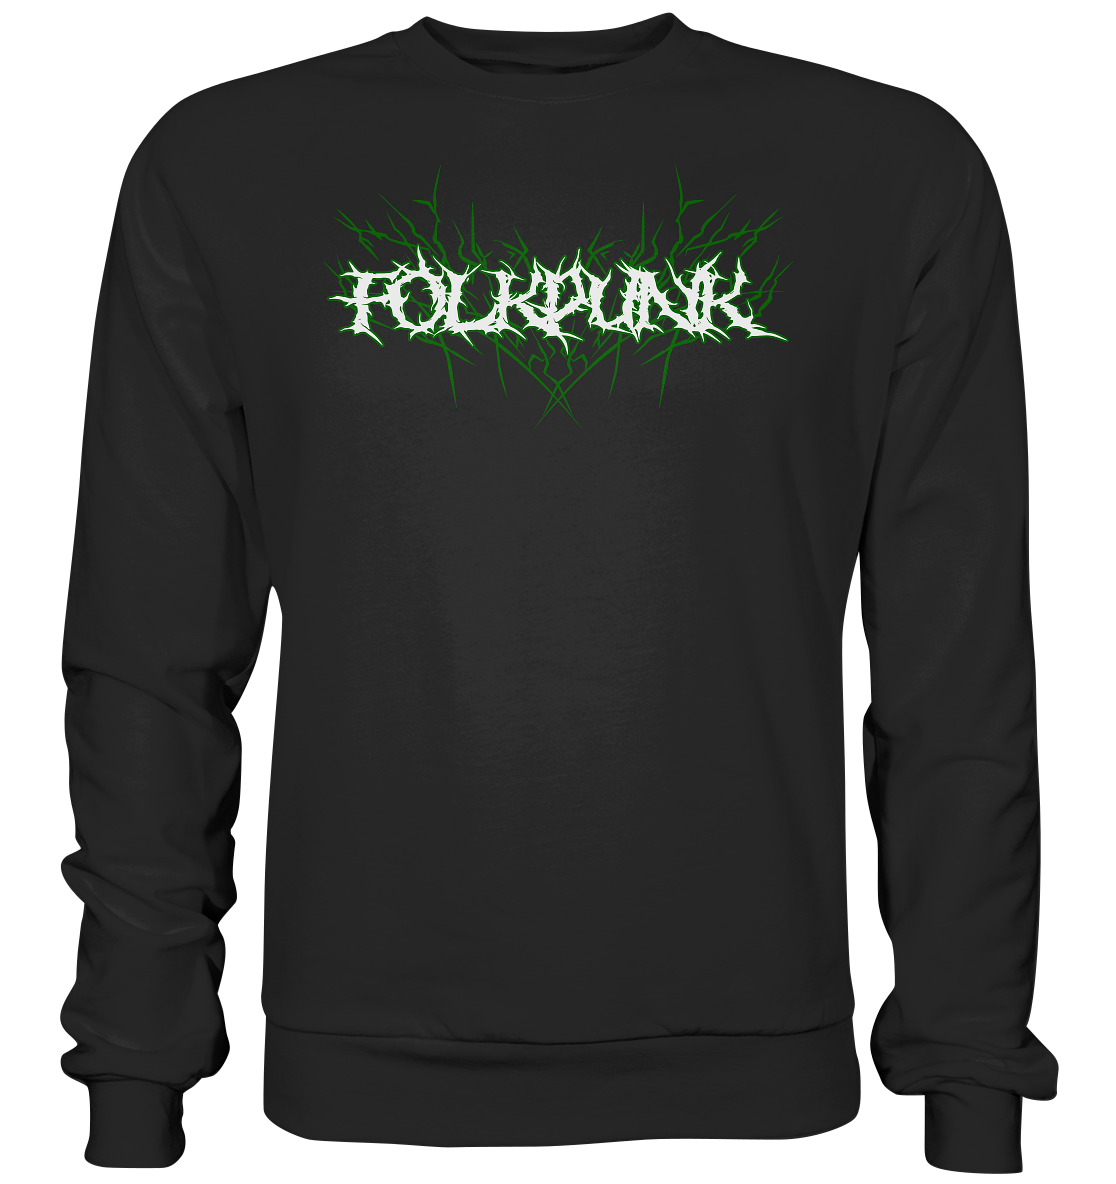 Folkpunk "Metal Band" - Basic Sweatshirt